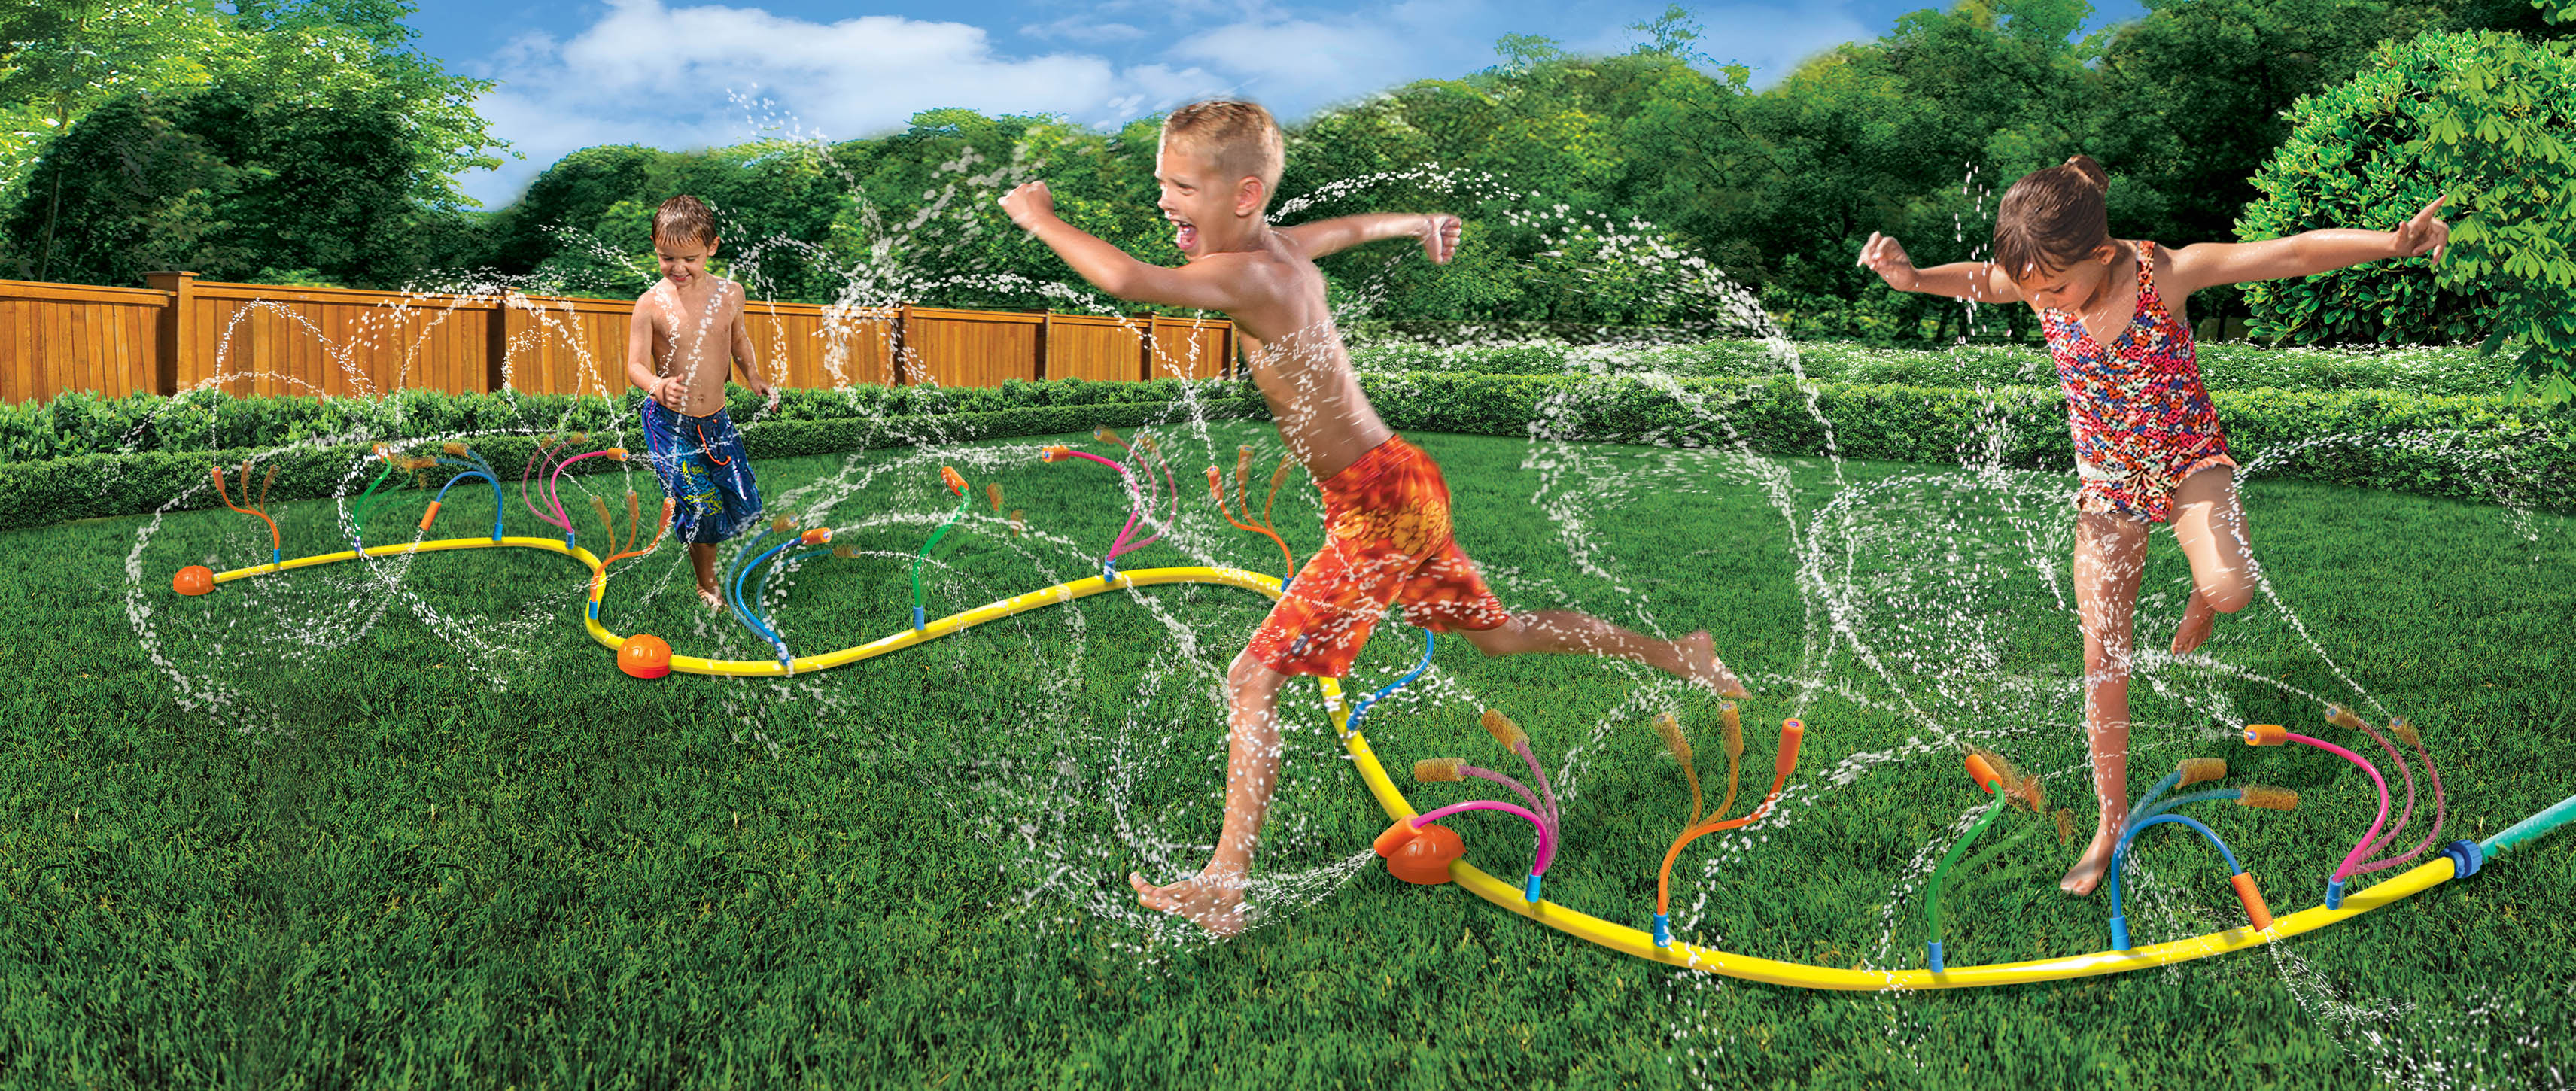 Wigglin' Water Sprinkler | Banzai | Backyard Fun!